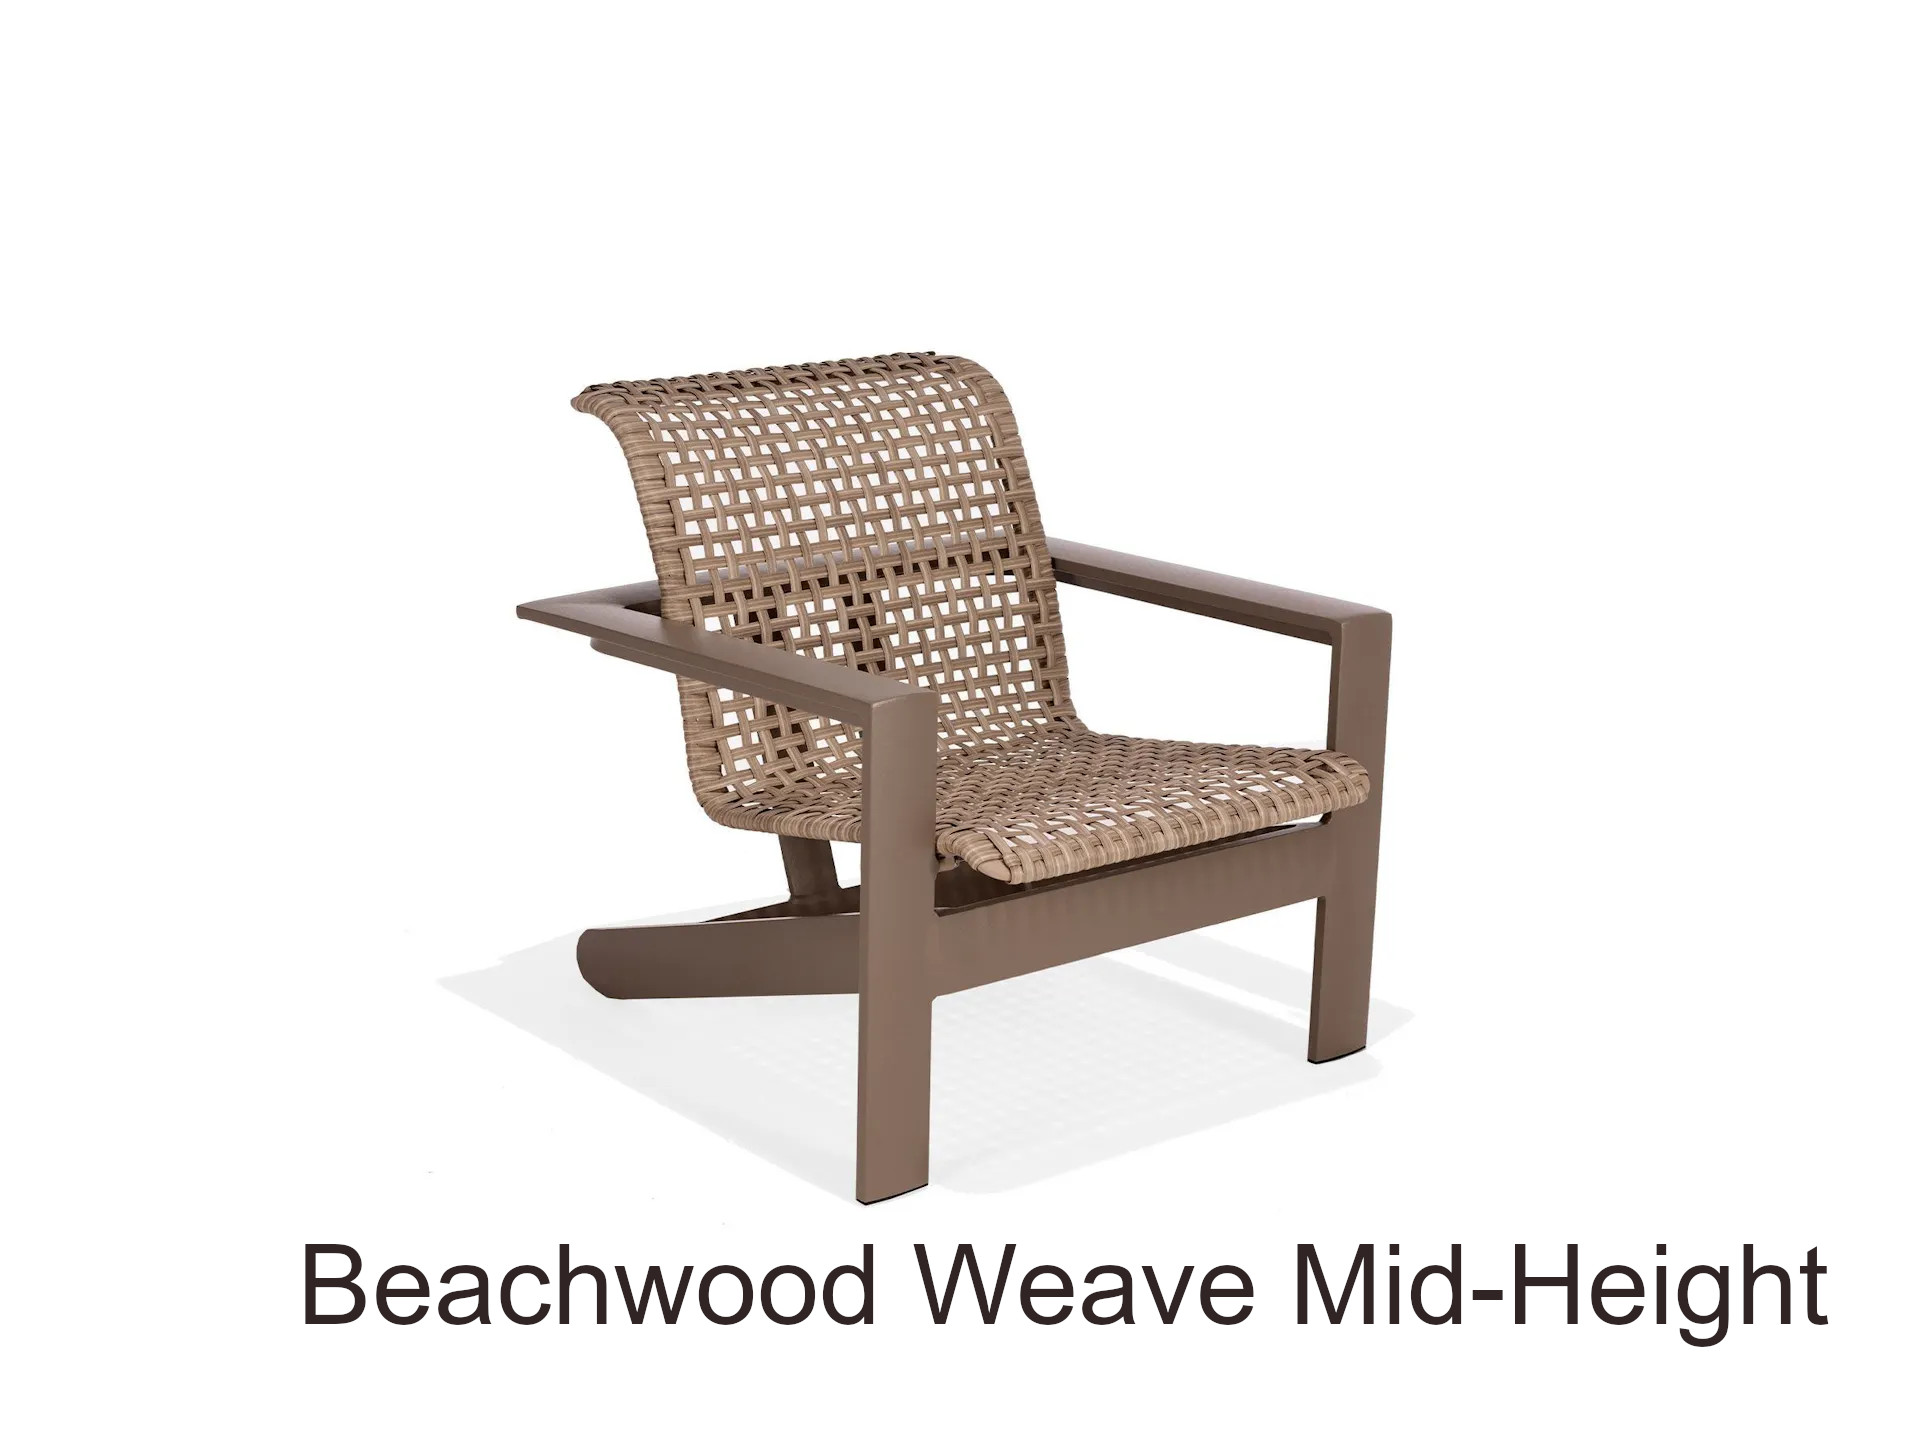 Beachwood Weave Mid-Height Adirondack Chair